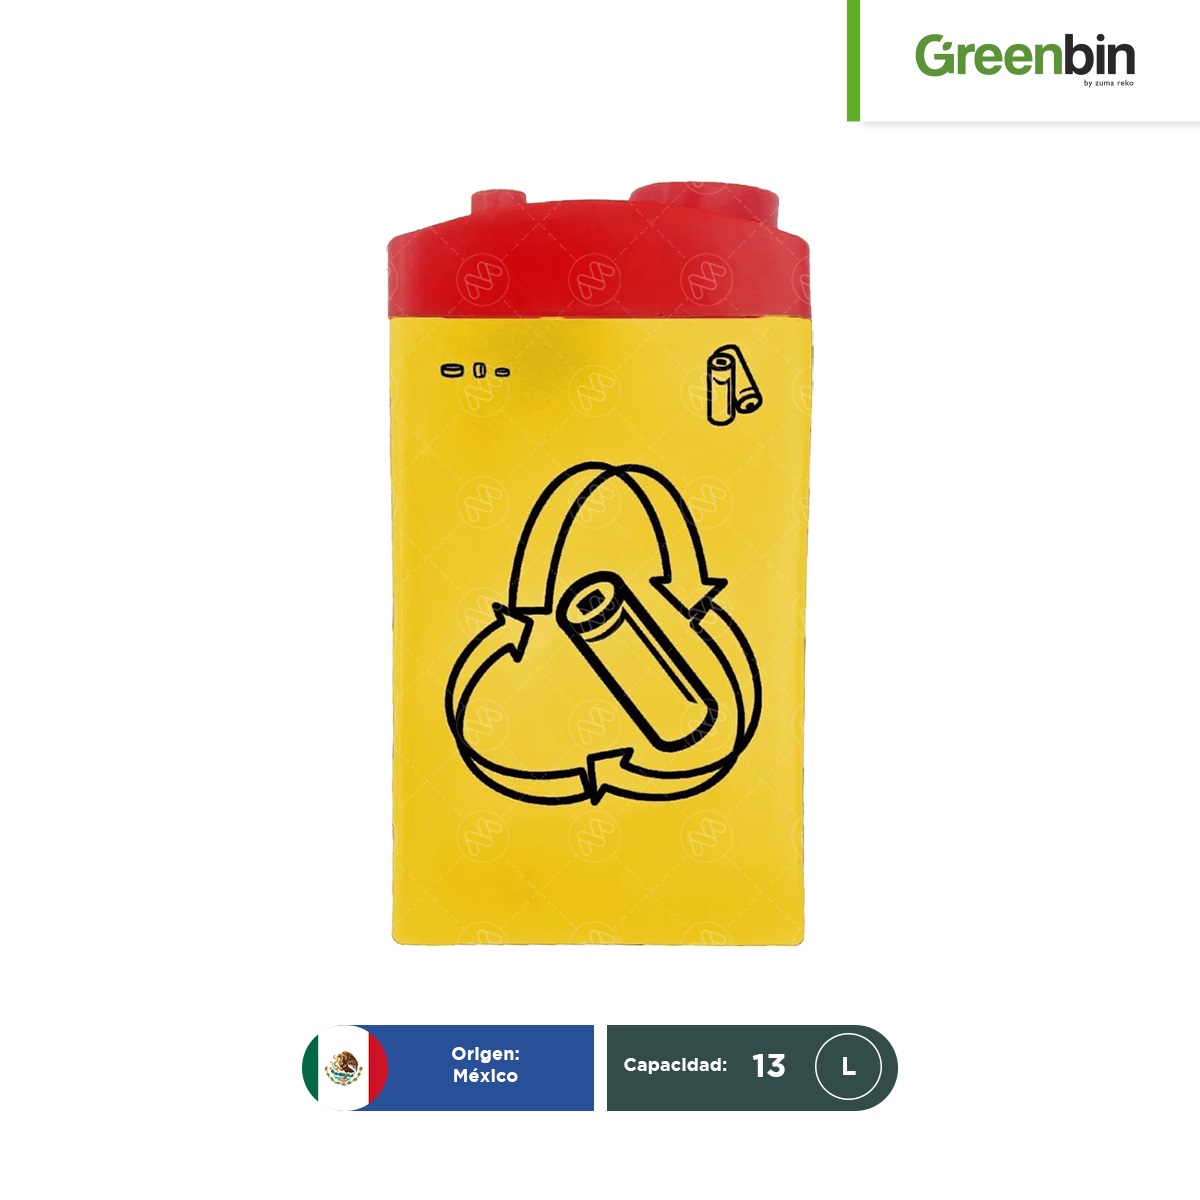 contenedor para pilas usadas probattery 13 l greenbin 001